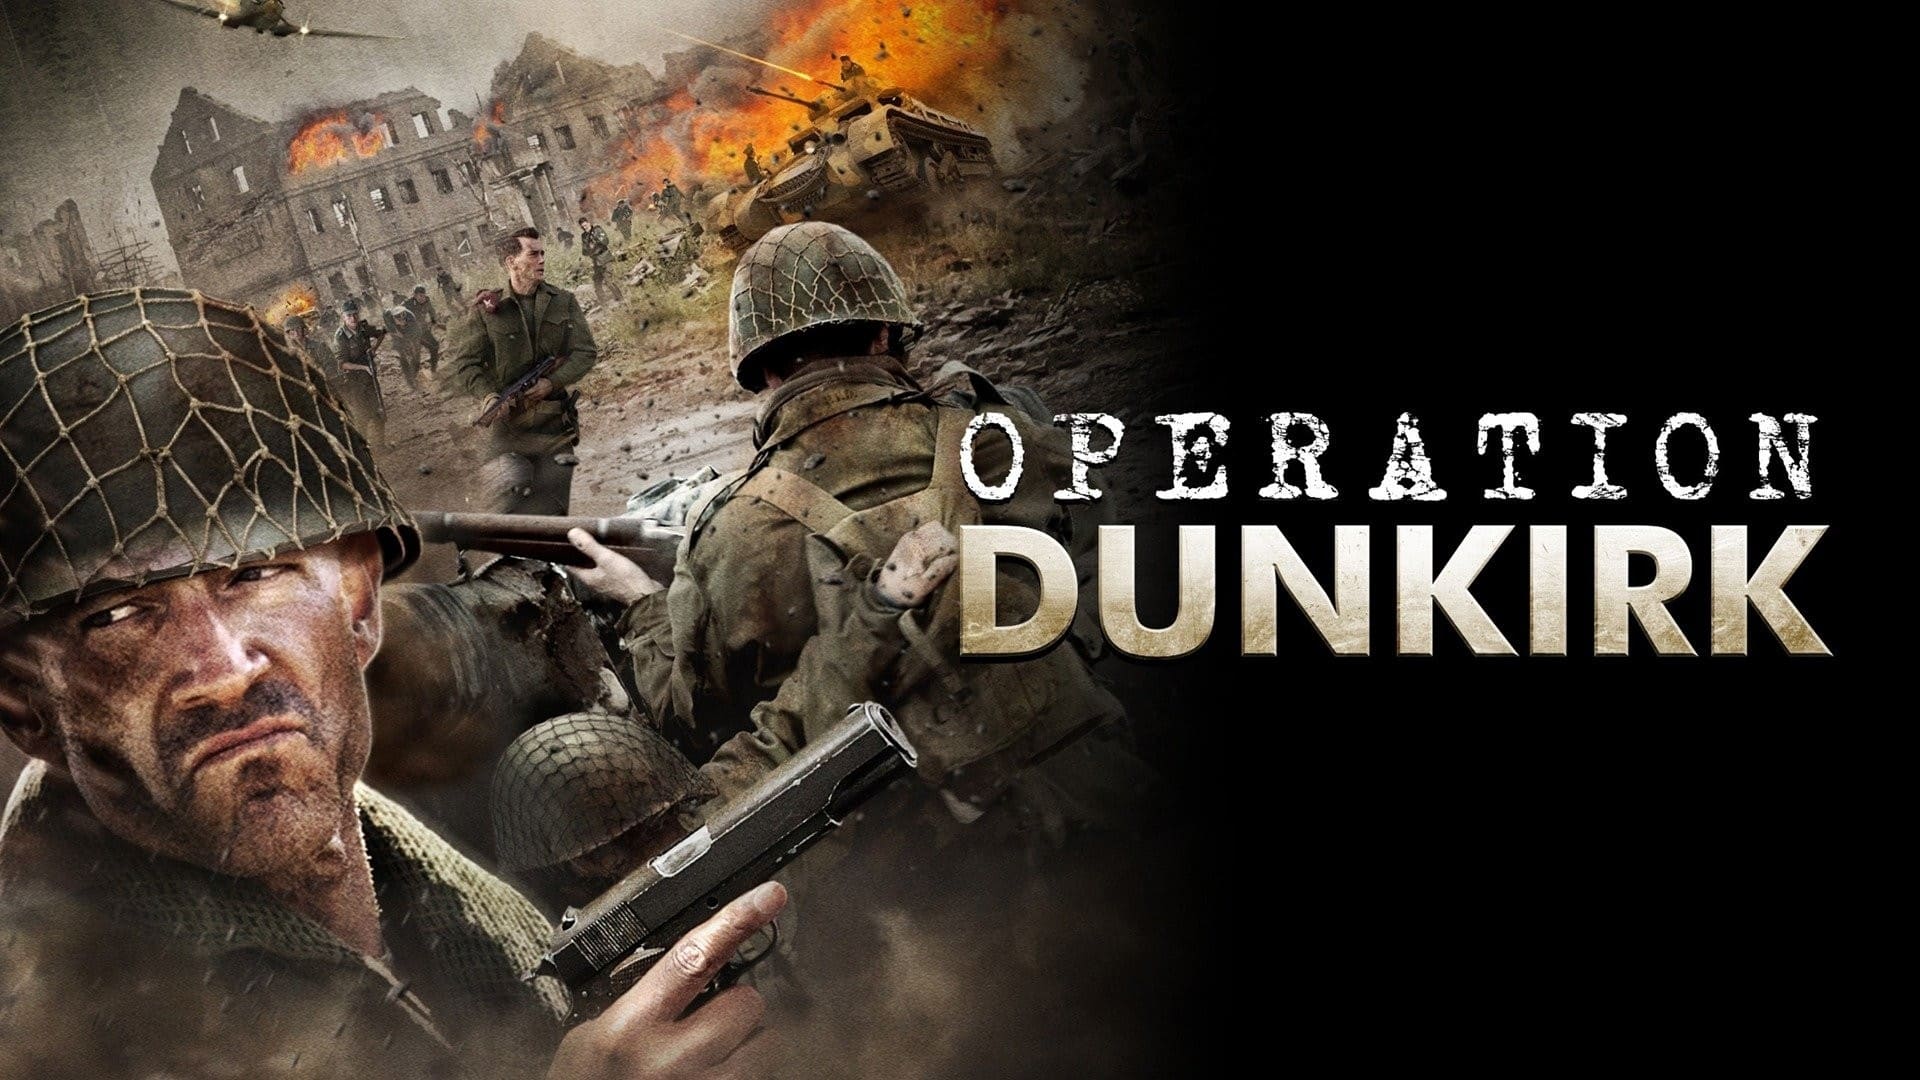 Operation Dunkirk (2017)